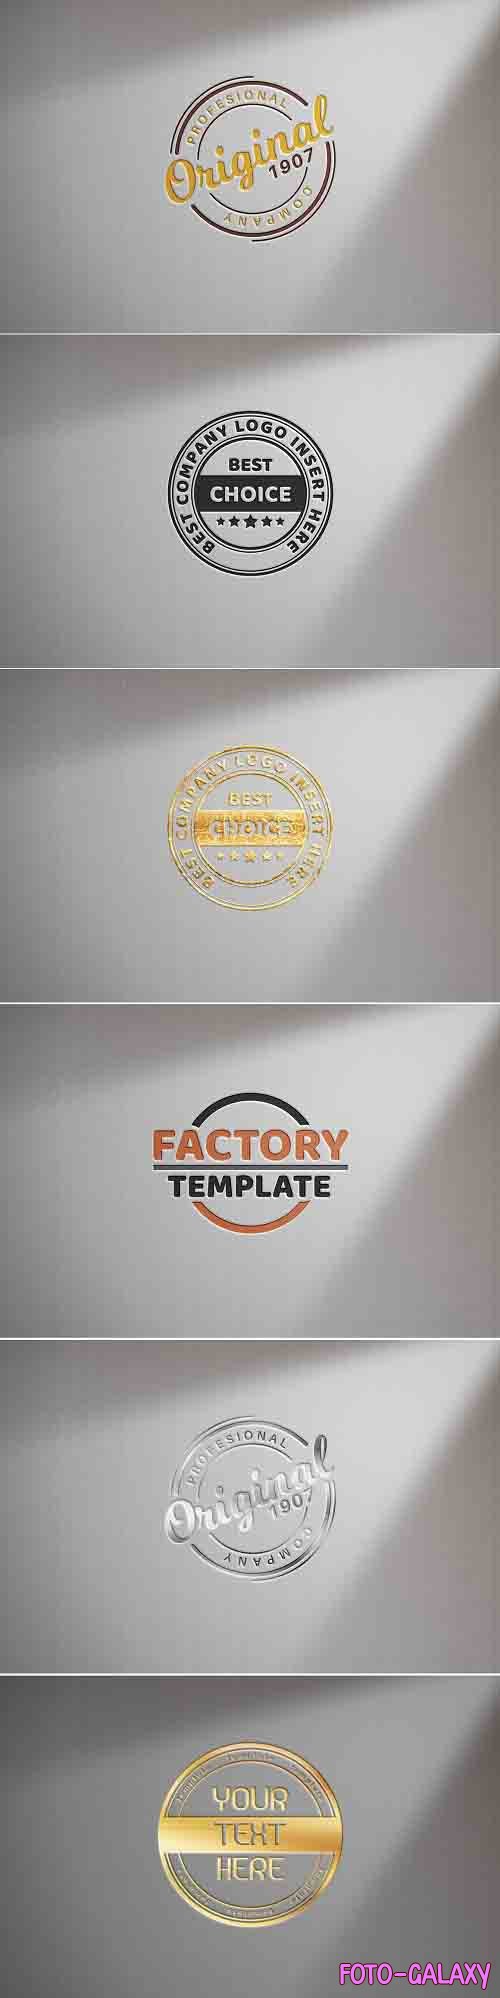 Logo on white paper - mockup template - 6172457